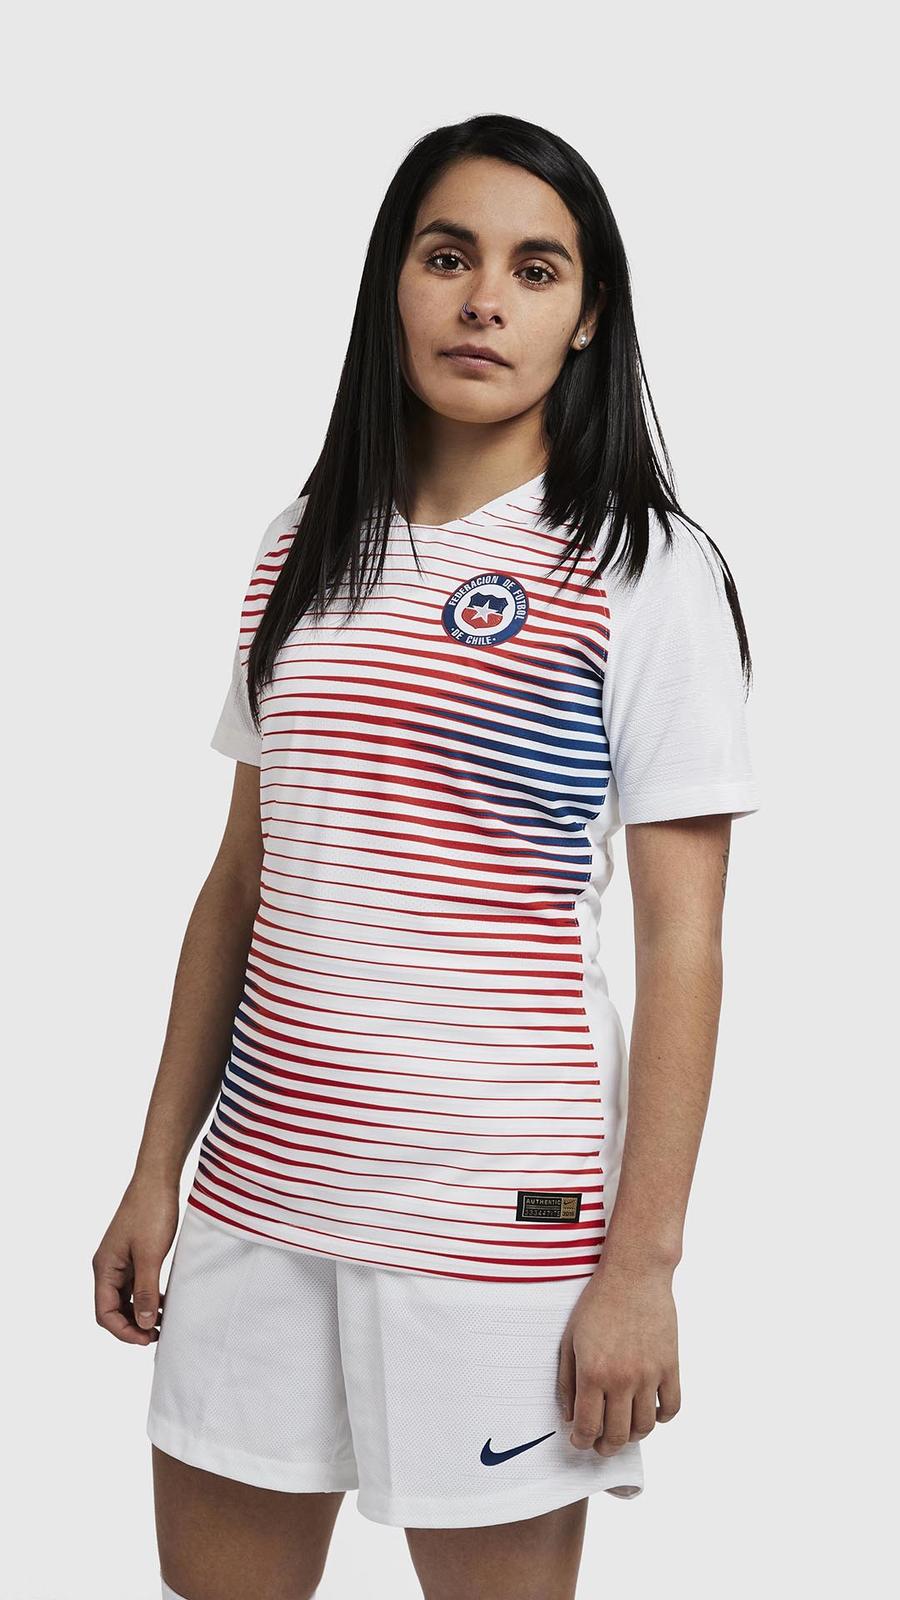 Chile 2019 Women's World Cup Nike Kits - FOOTBALL FASHION